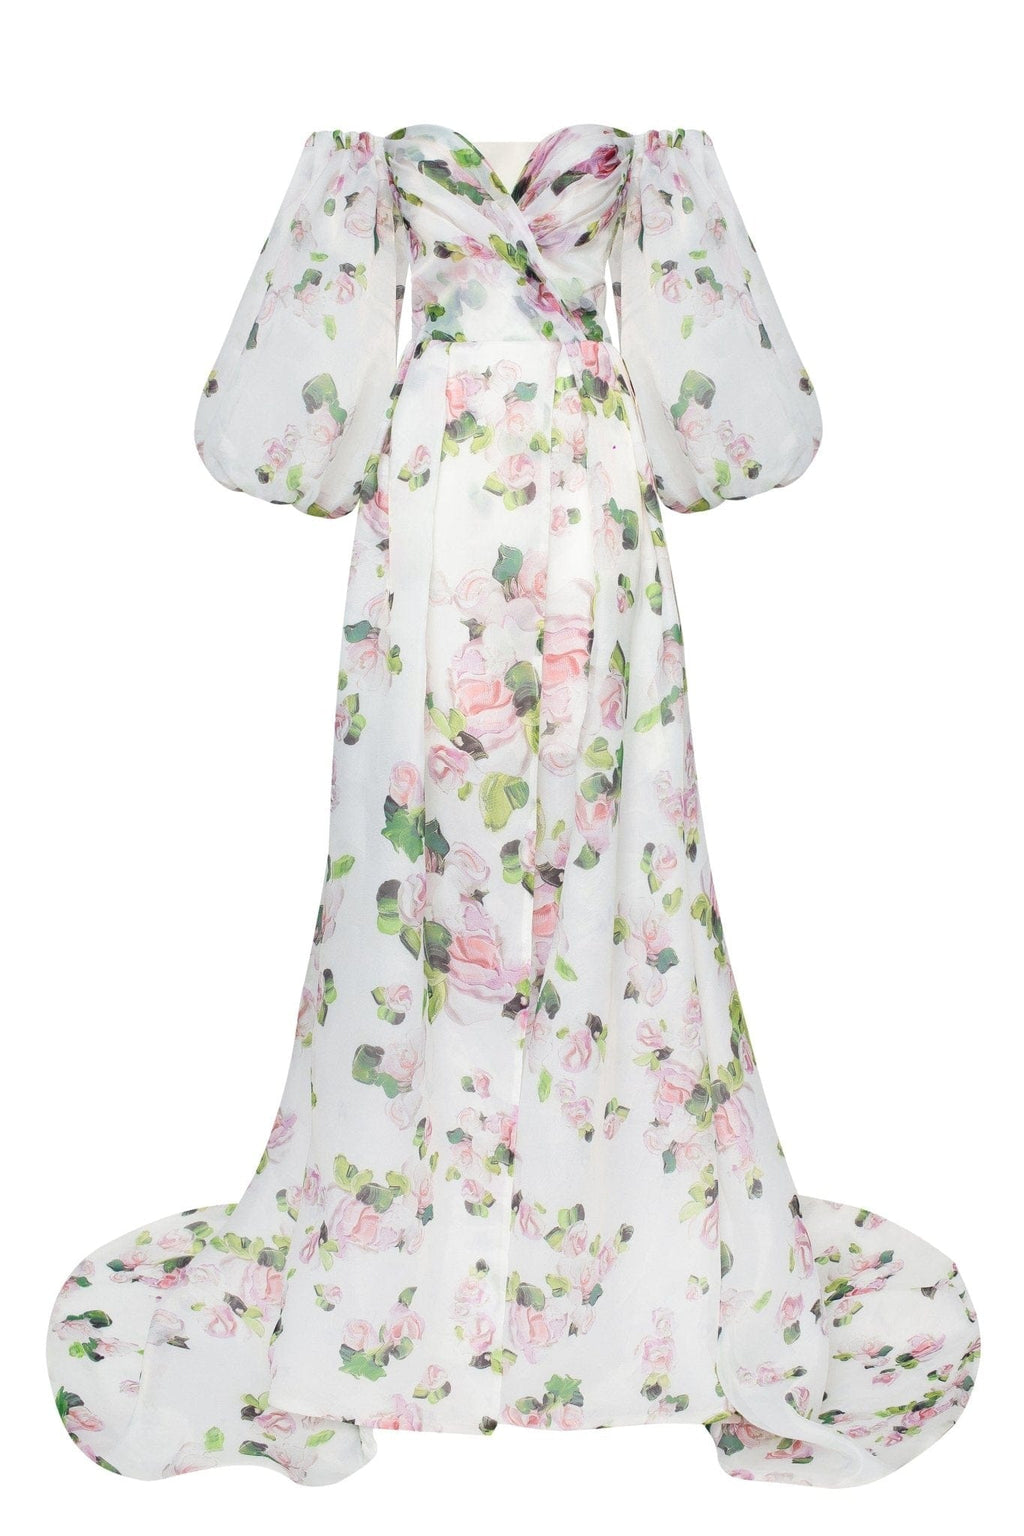 Blossom Love White Floral Puff Sleeve Tie Waist Mini Dress